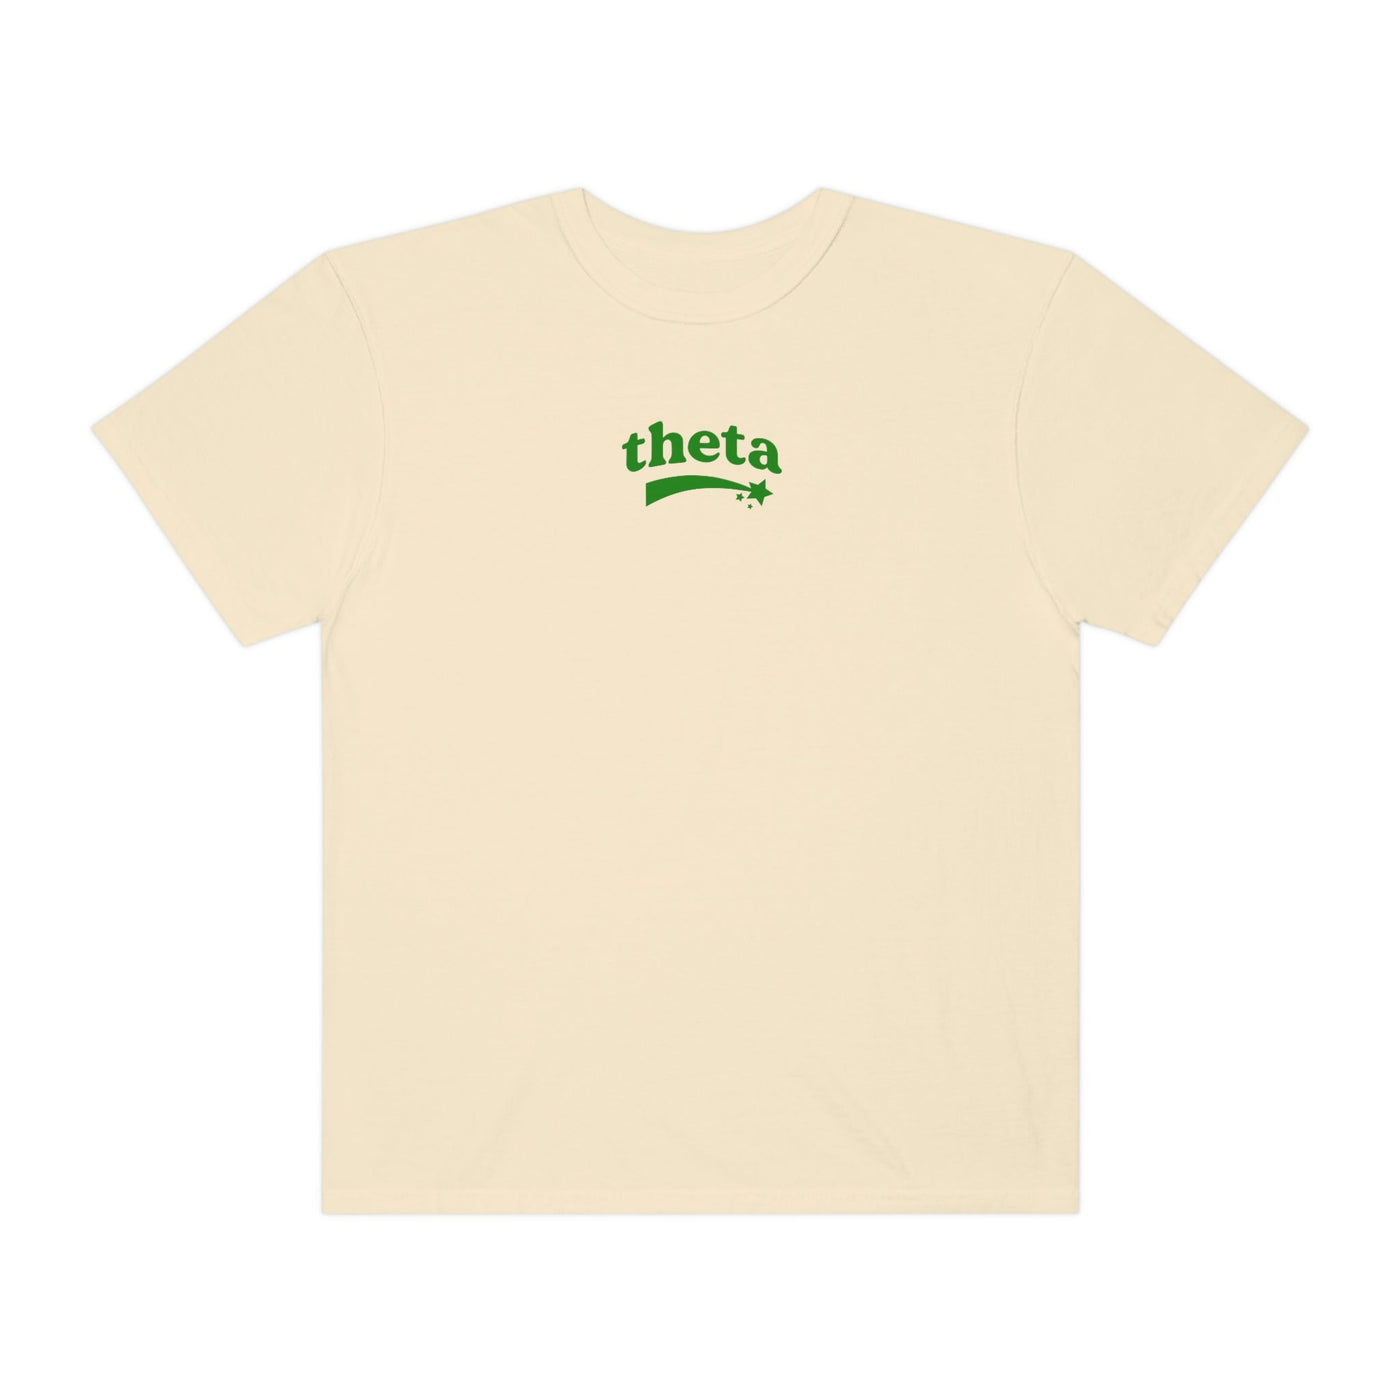 Kappa Alpha Theta Planet T-shirt | Be Kind to the Planet Trendy Sorority shirt